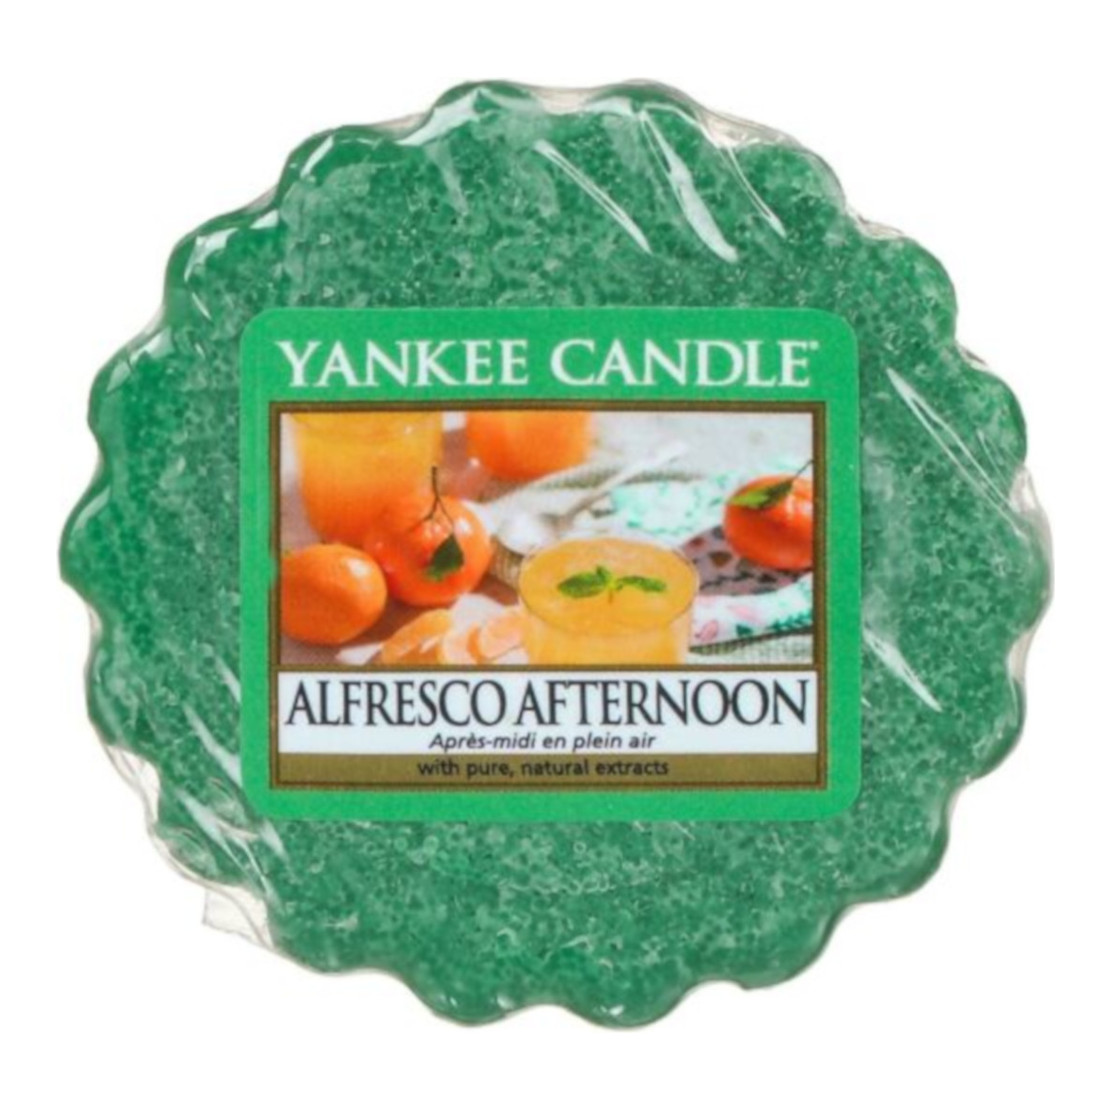 Yankee Candle Alfresco Afternoon Wax Melt